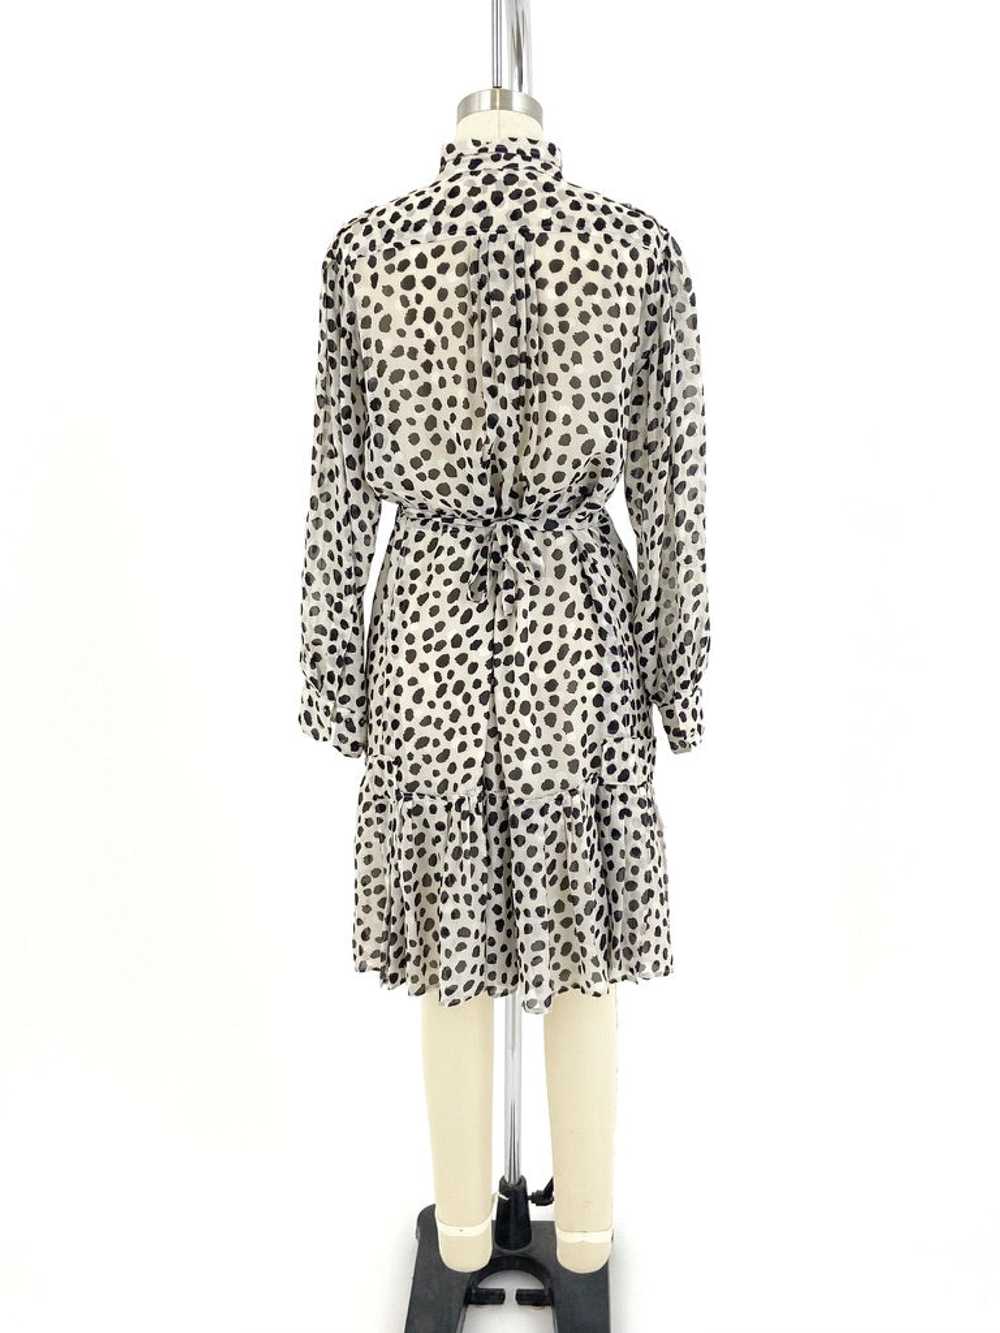 Yves Saint Laurent Silk Chiffon Printed Dress - image 4